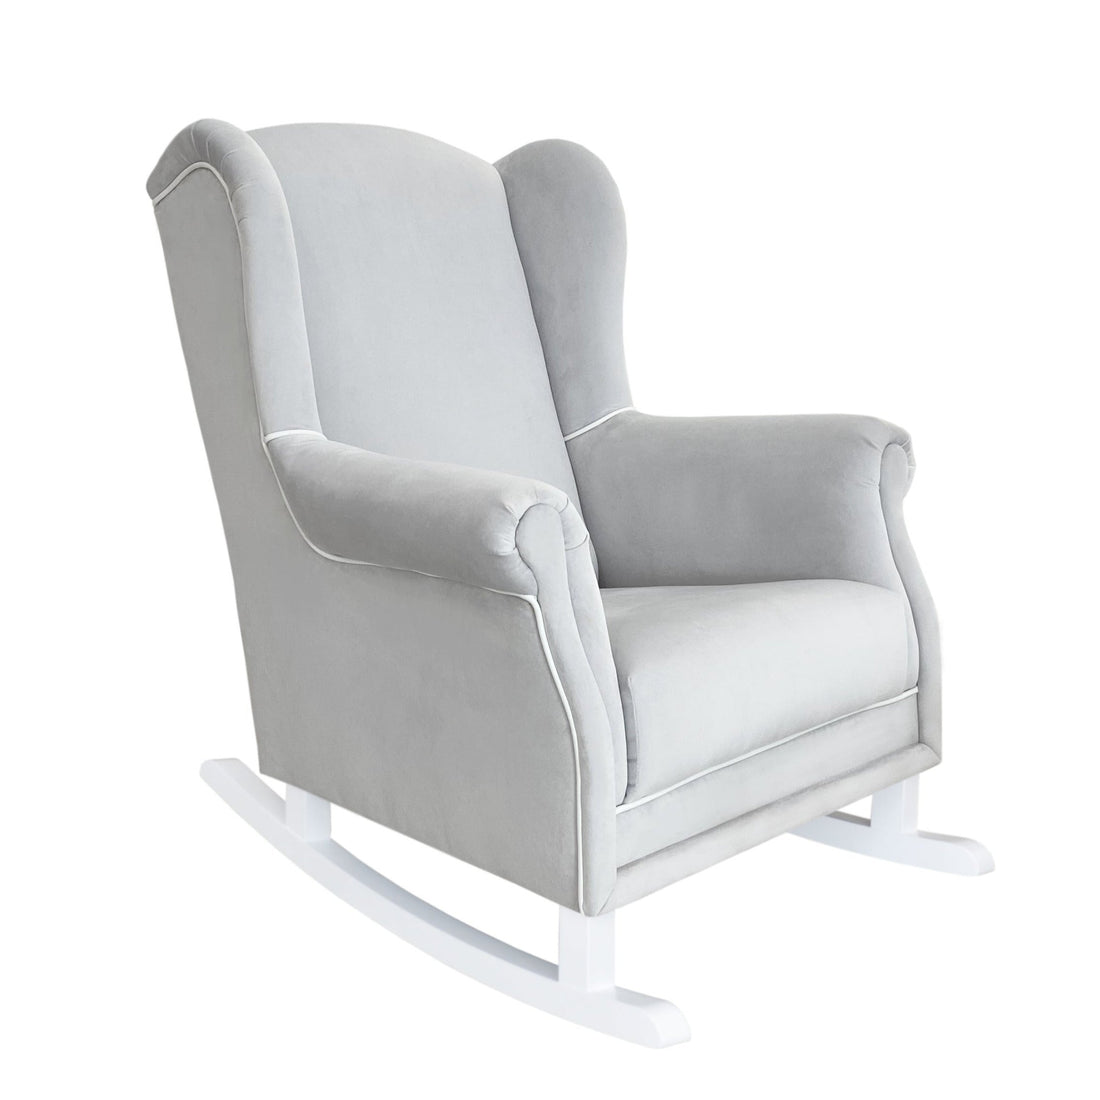 Rocking nursing chair PRESTIGE silver-grey | handcrafted rocking nursing chair | luxury baby furniture | light grey nursing rocking chair